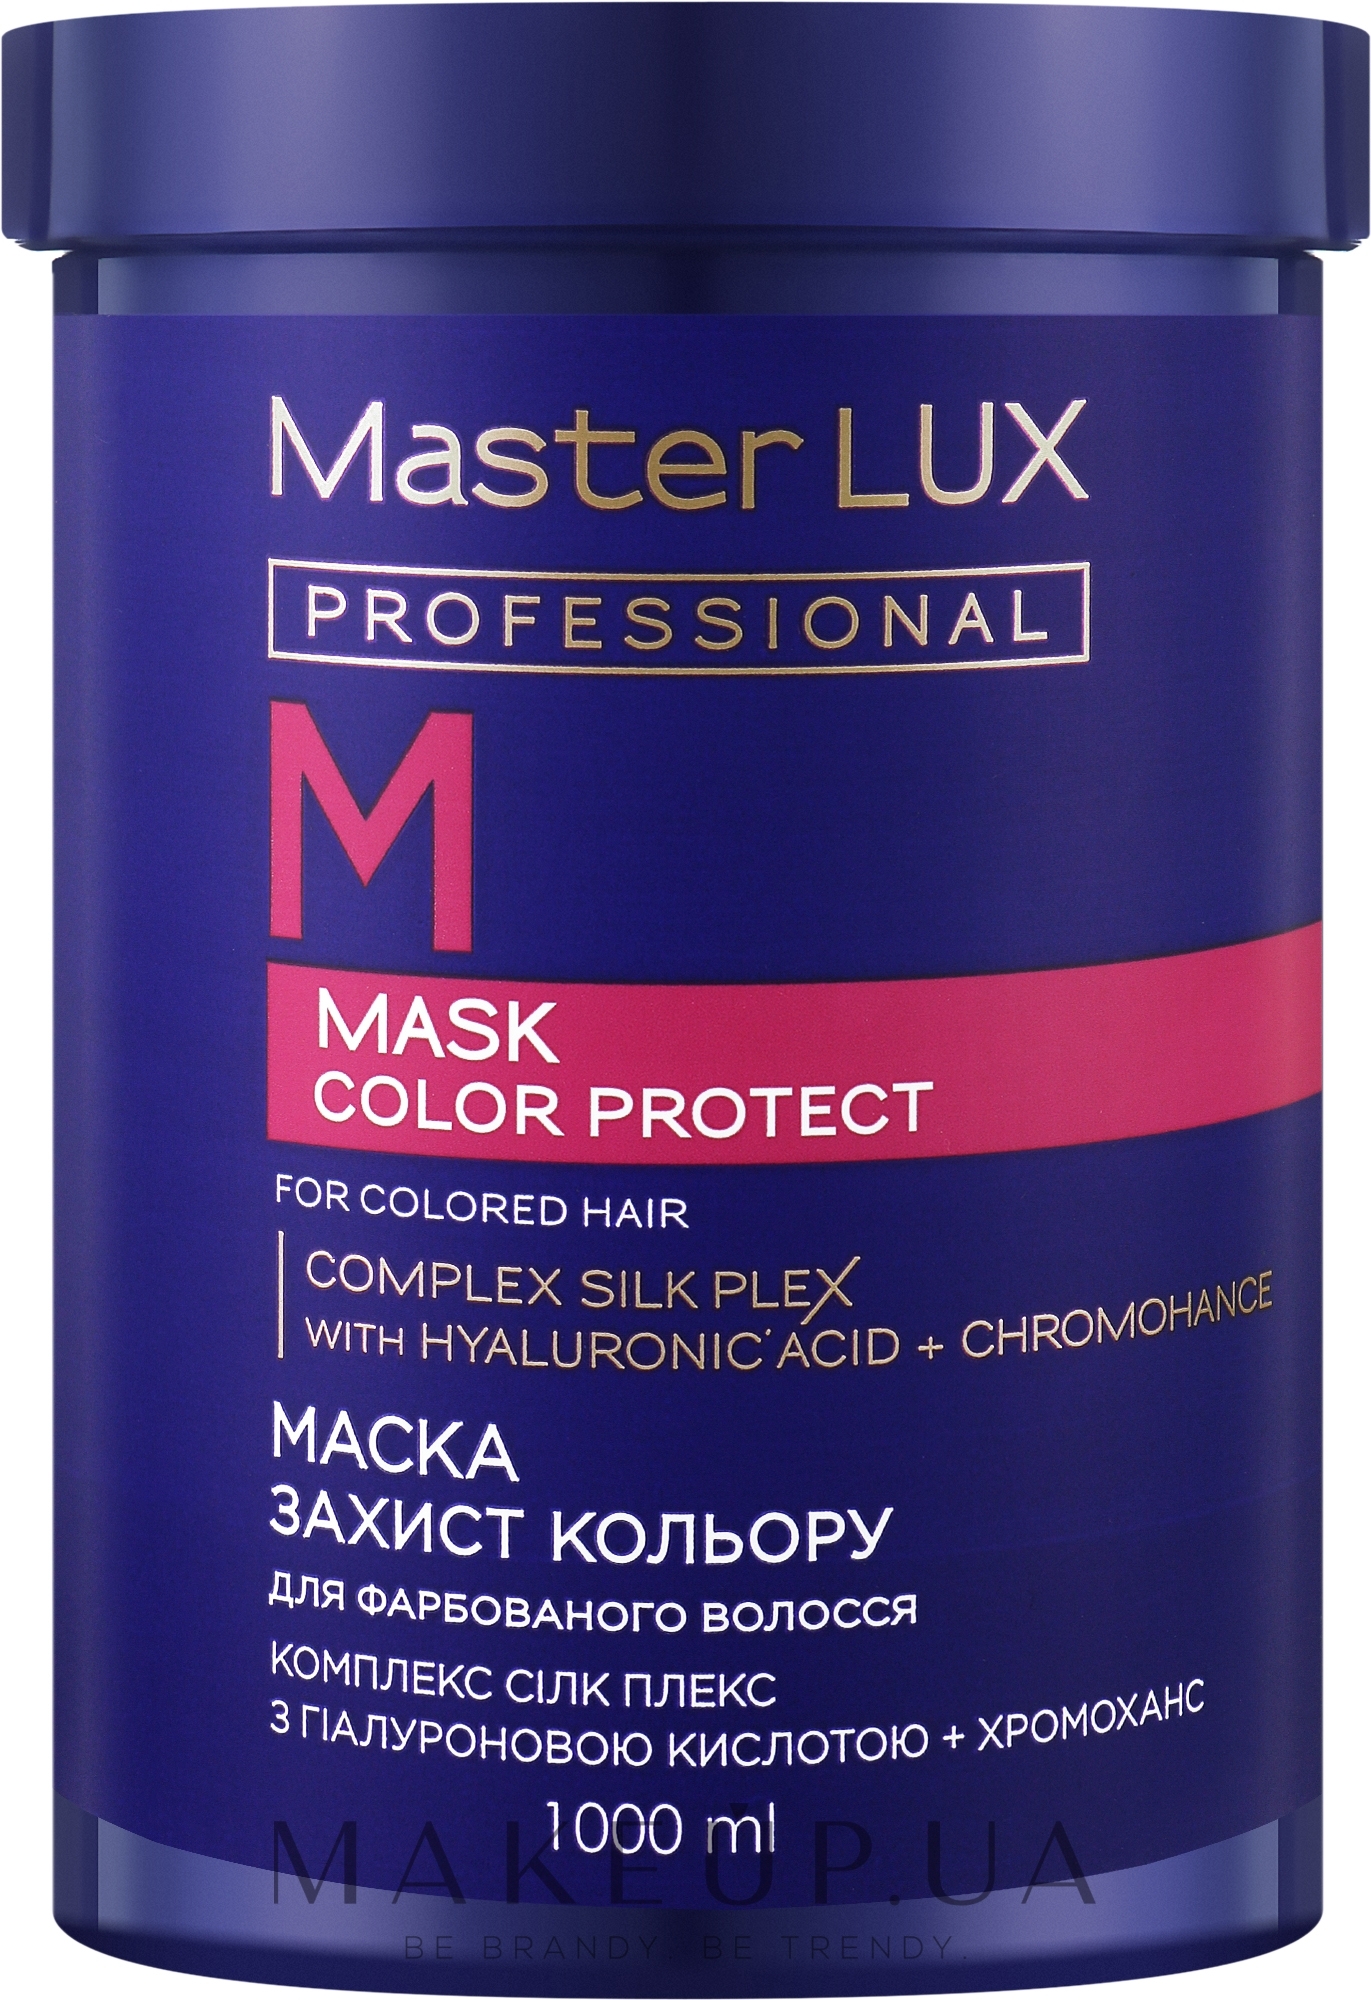 Маска для окрашенных волос "Защита цвета" - Master LUX Professional Color Protect Mask — фото 1000ml